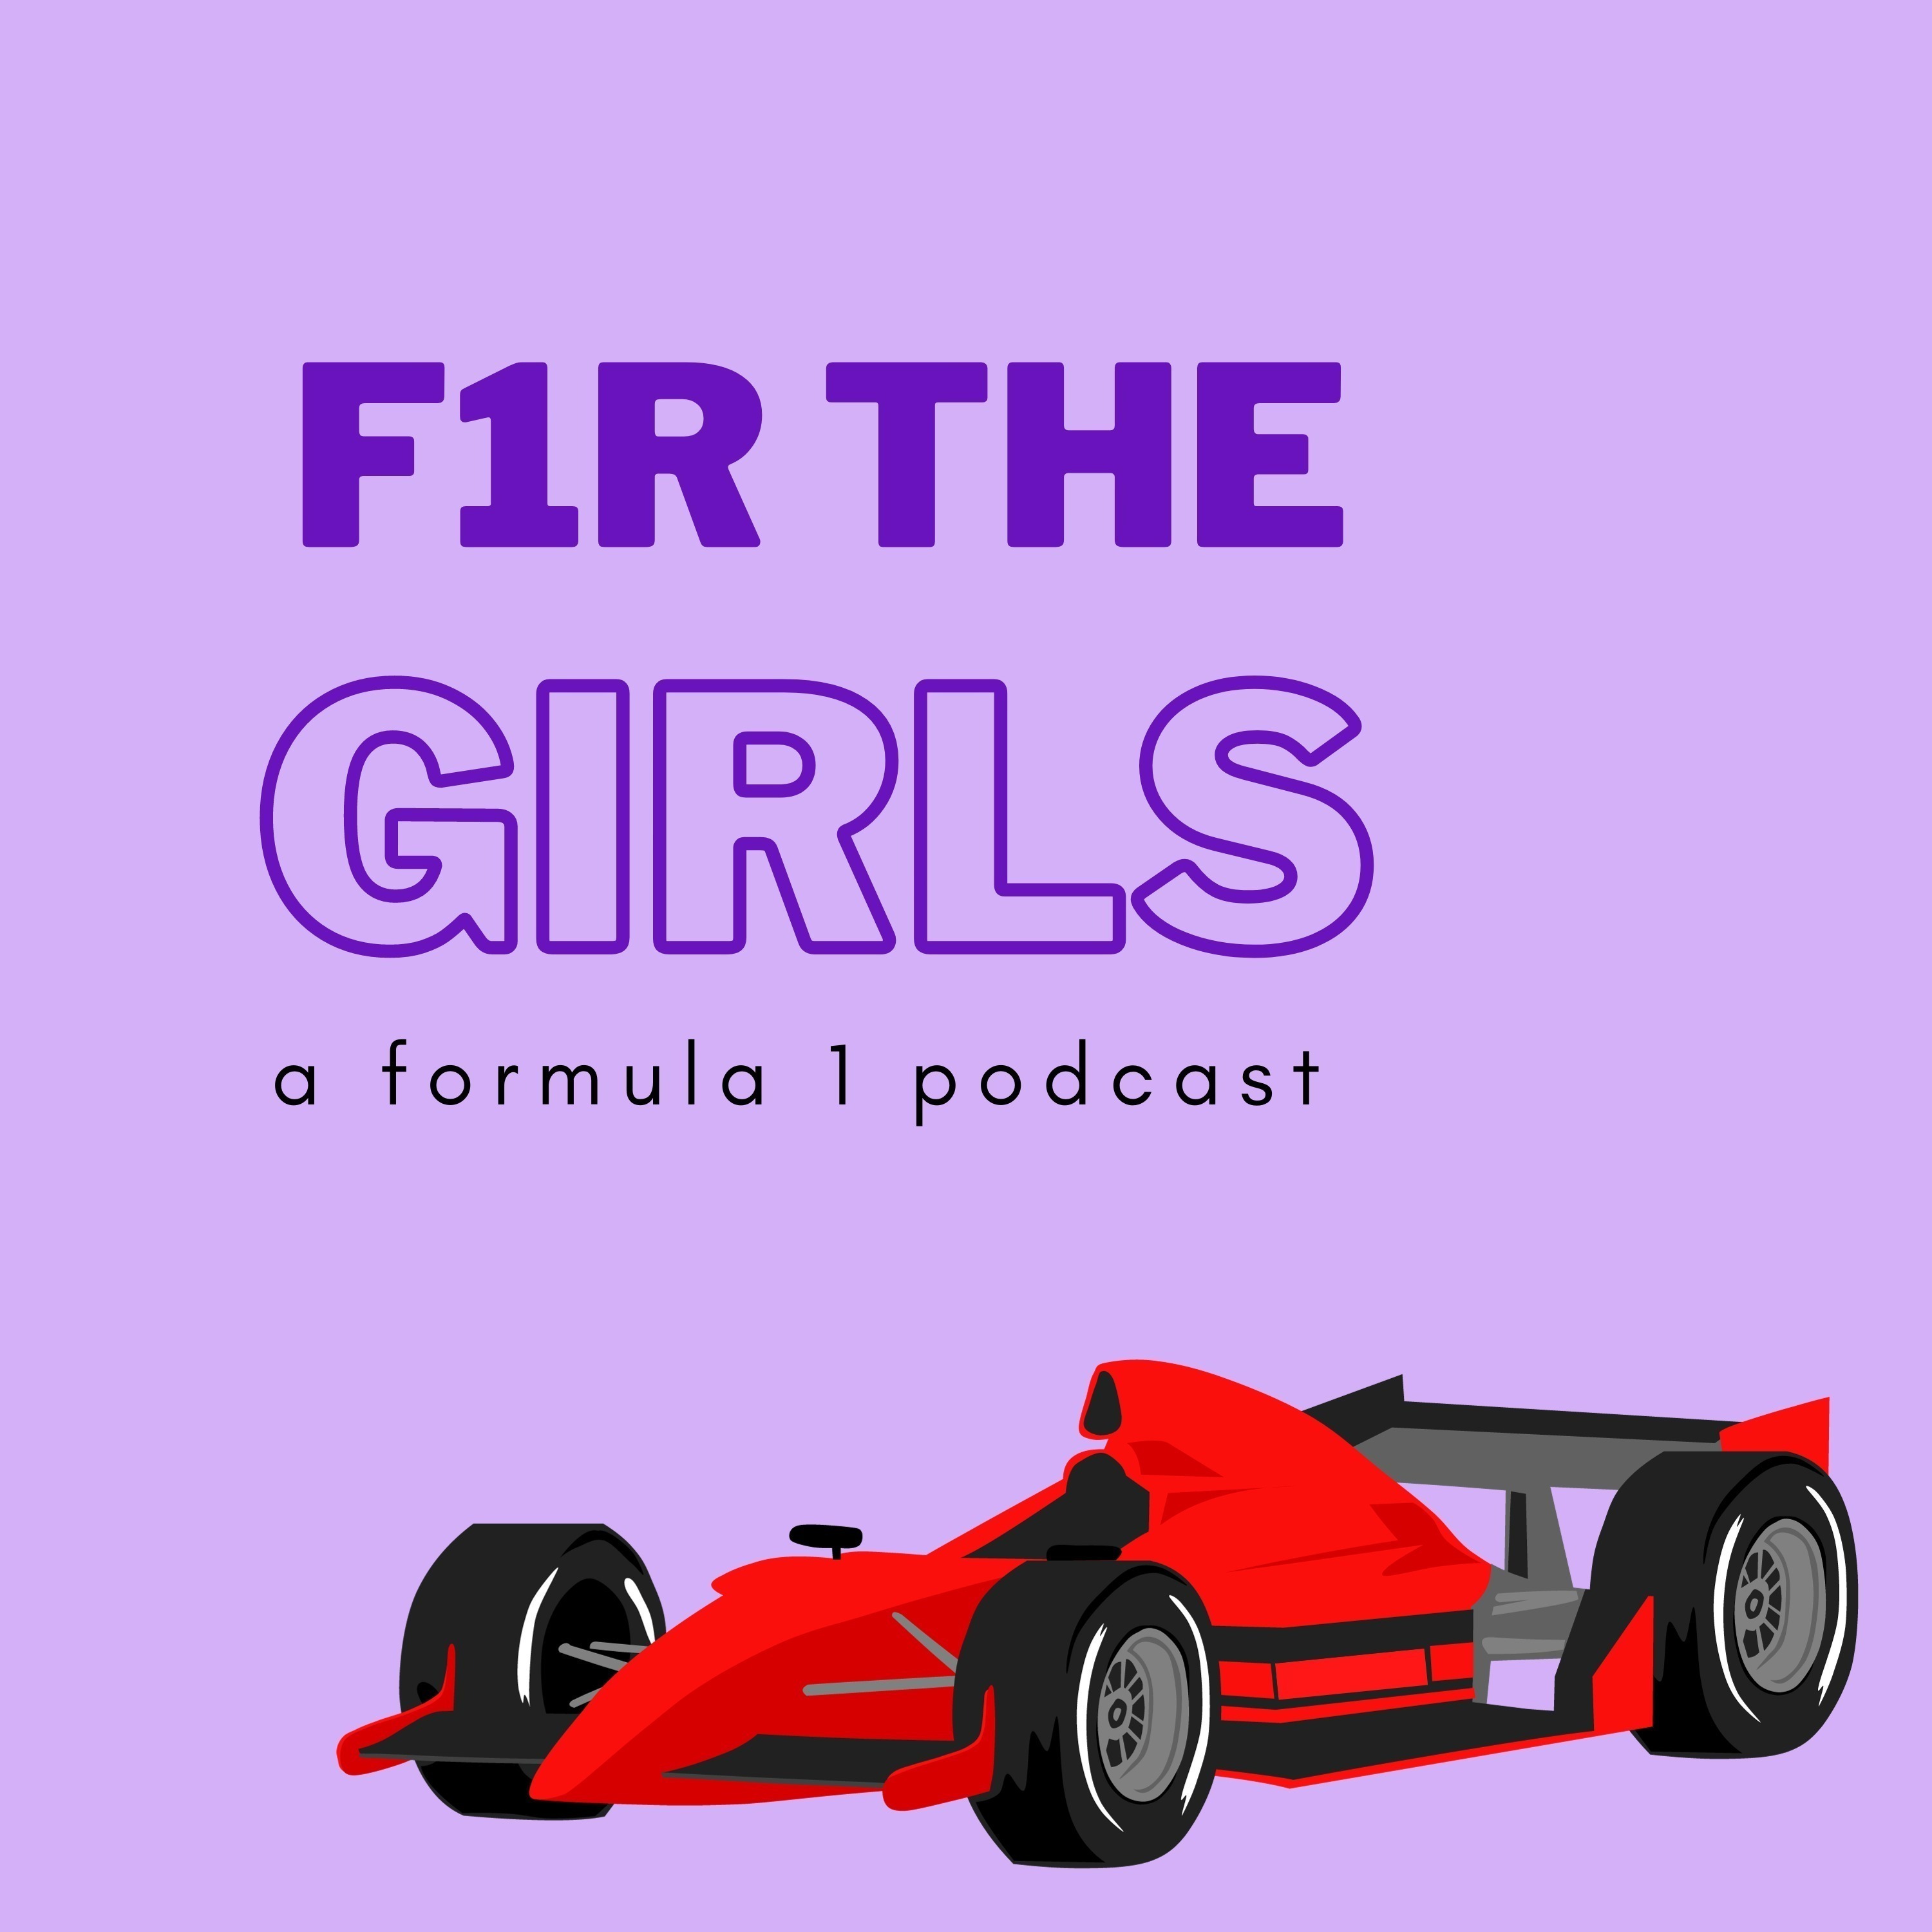 F1R THE GIRLS: A Formula 1 Podcast